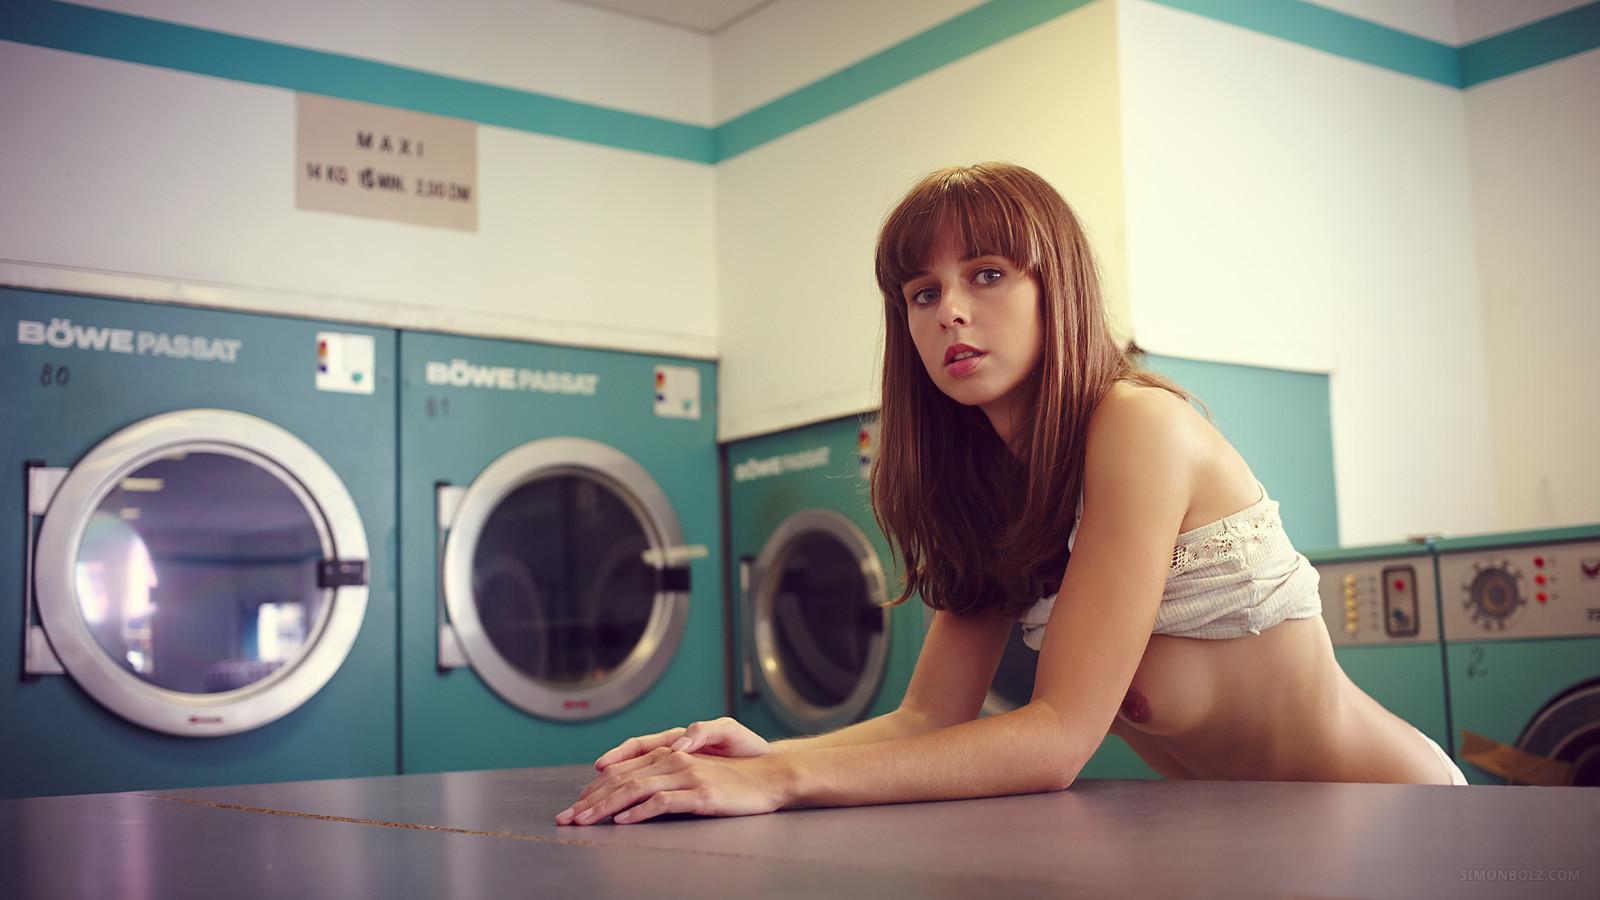 laundry-girls-nude-washing-machine-photo-mix-33